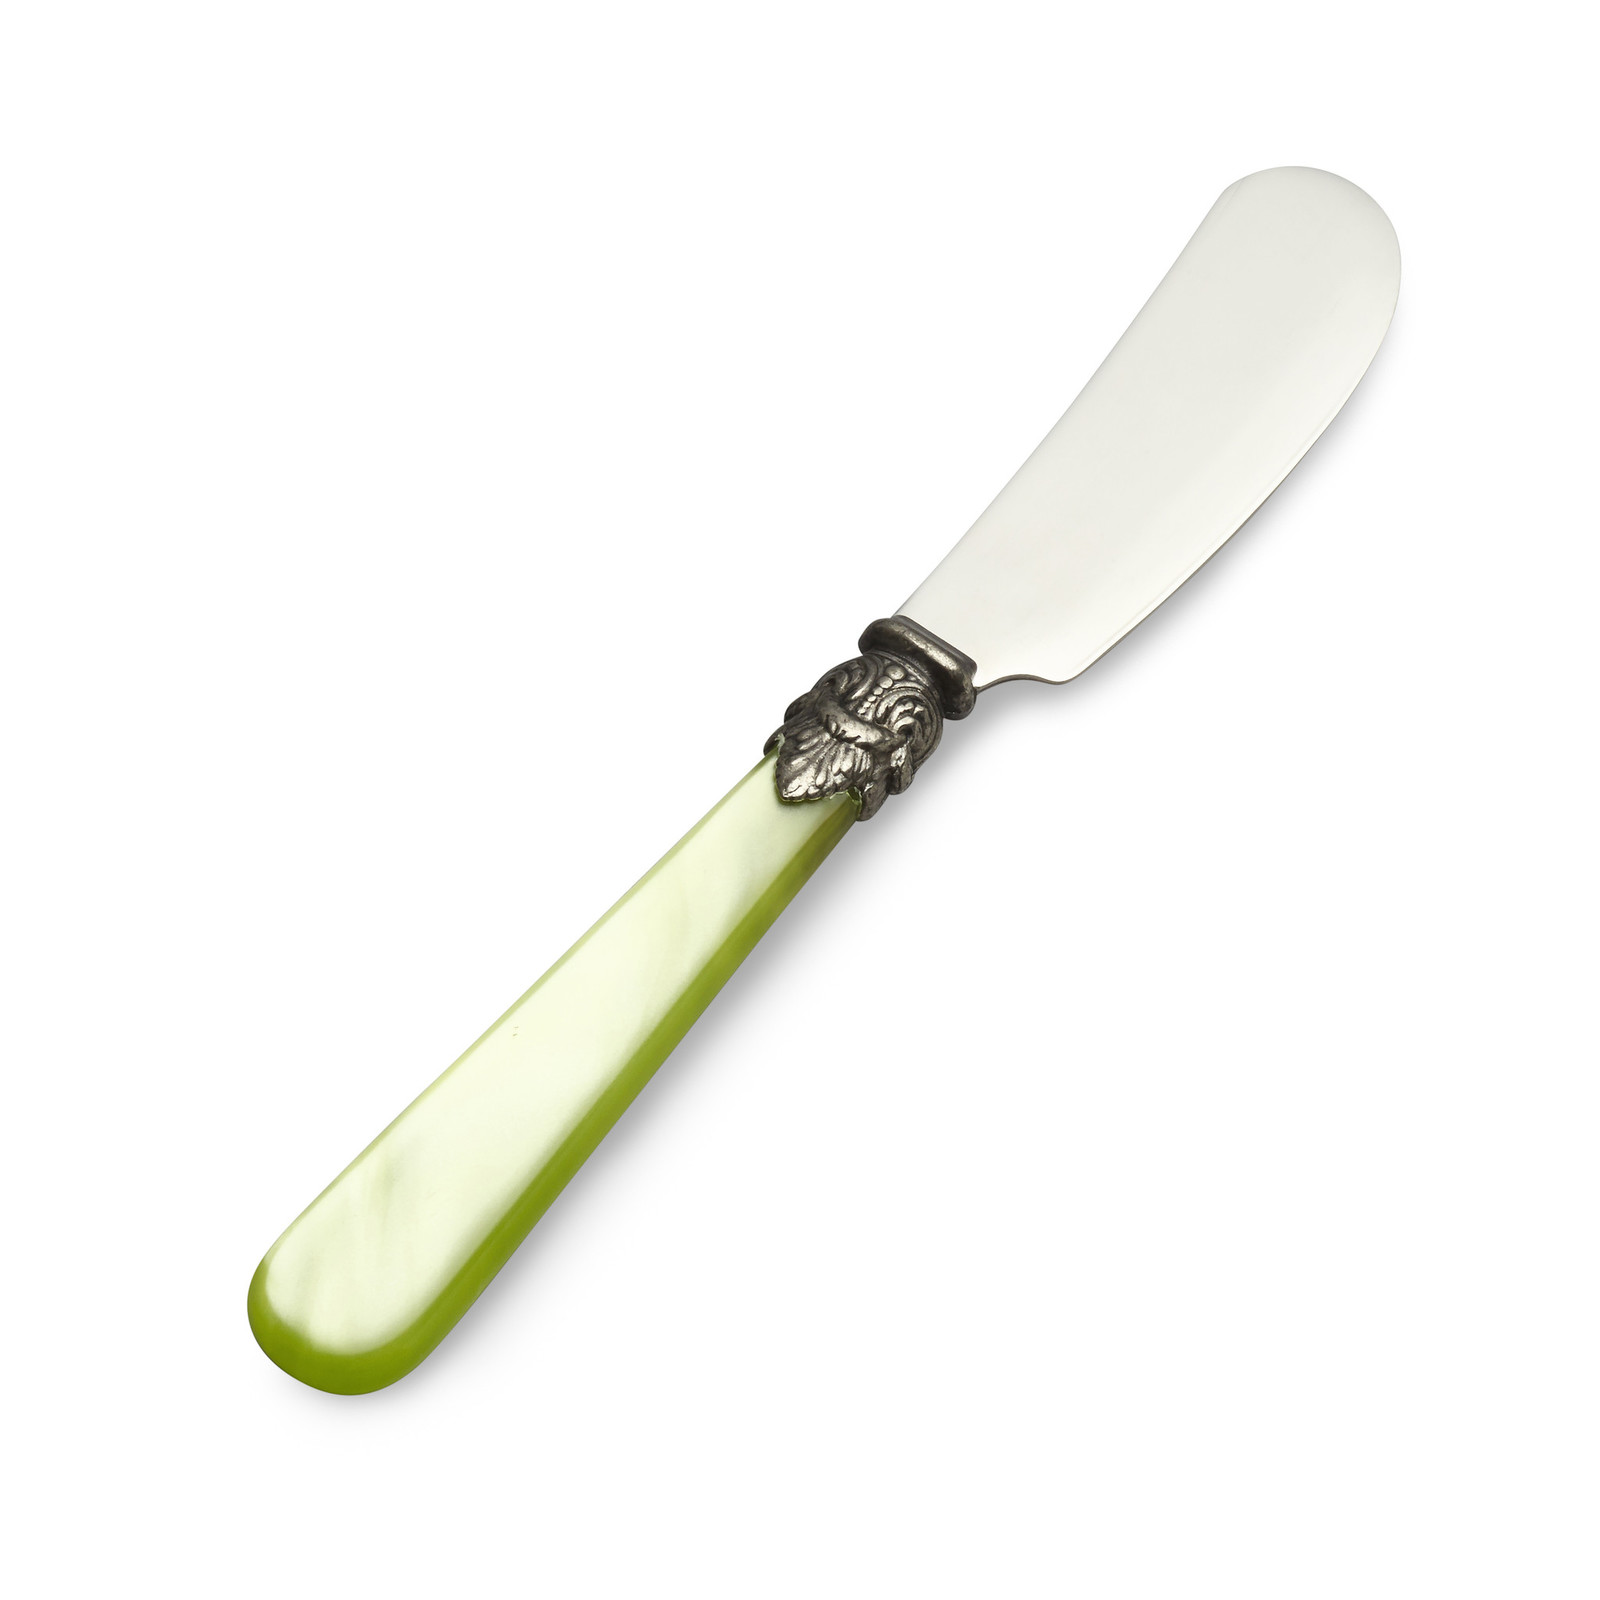 Buttermesser / Tapasmesser, Hellgrün mit Perlmutt (13,5 cm)